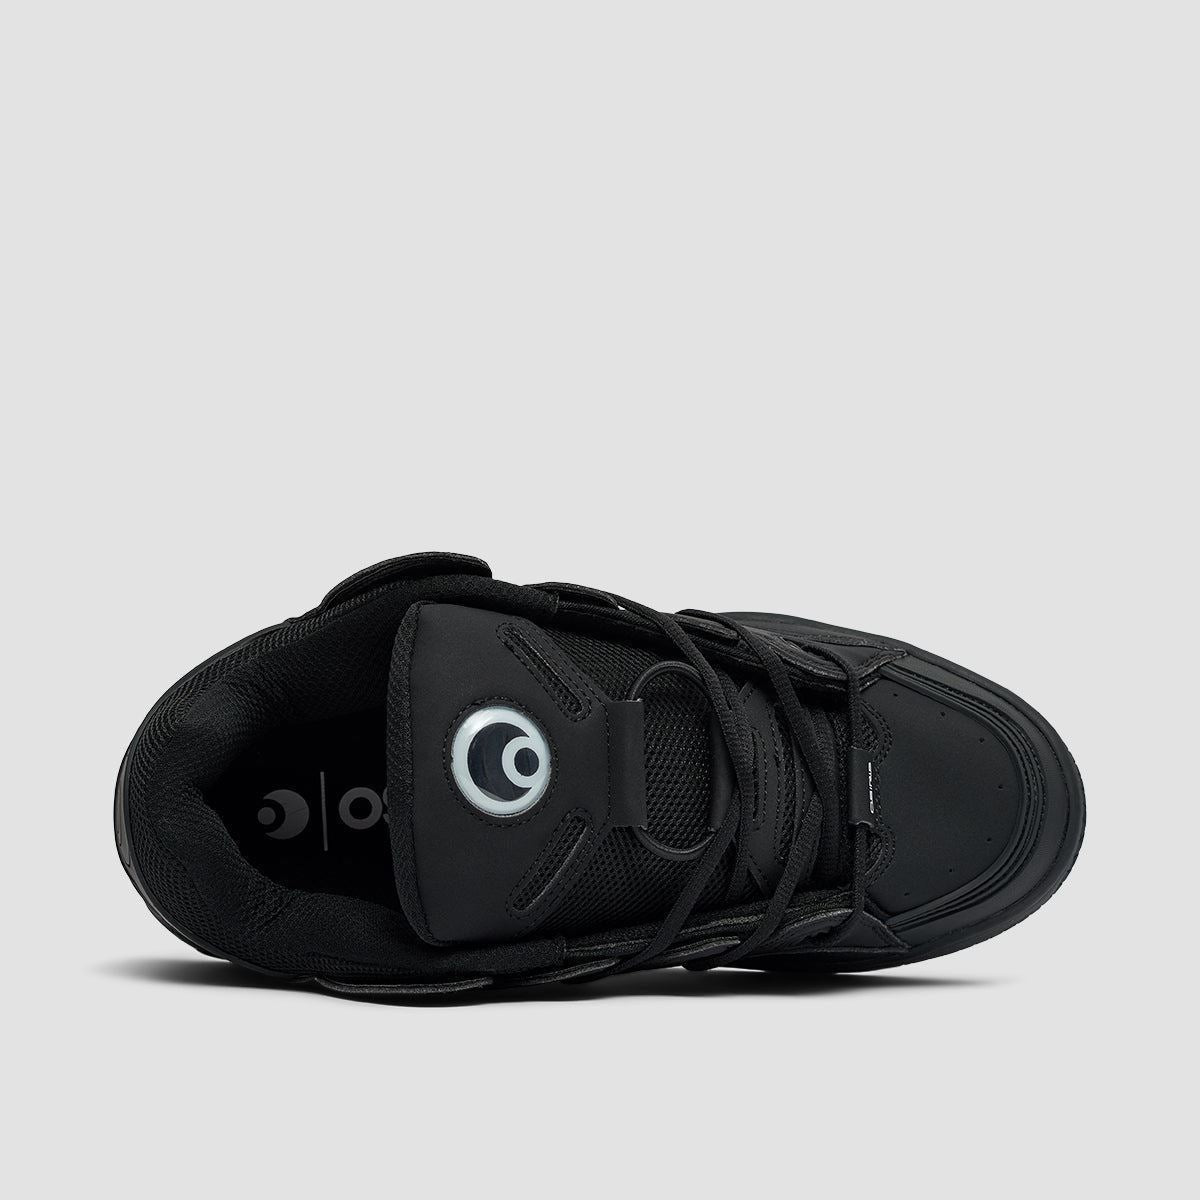 Osiris D3 OG Shoes - Black/Black/Black